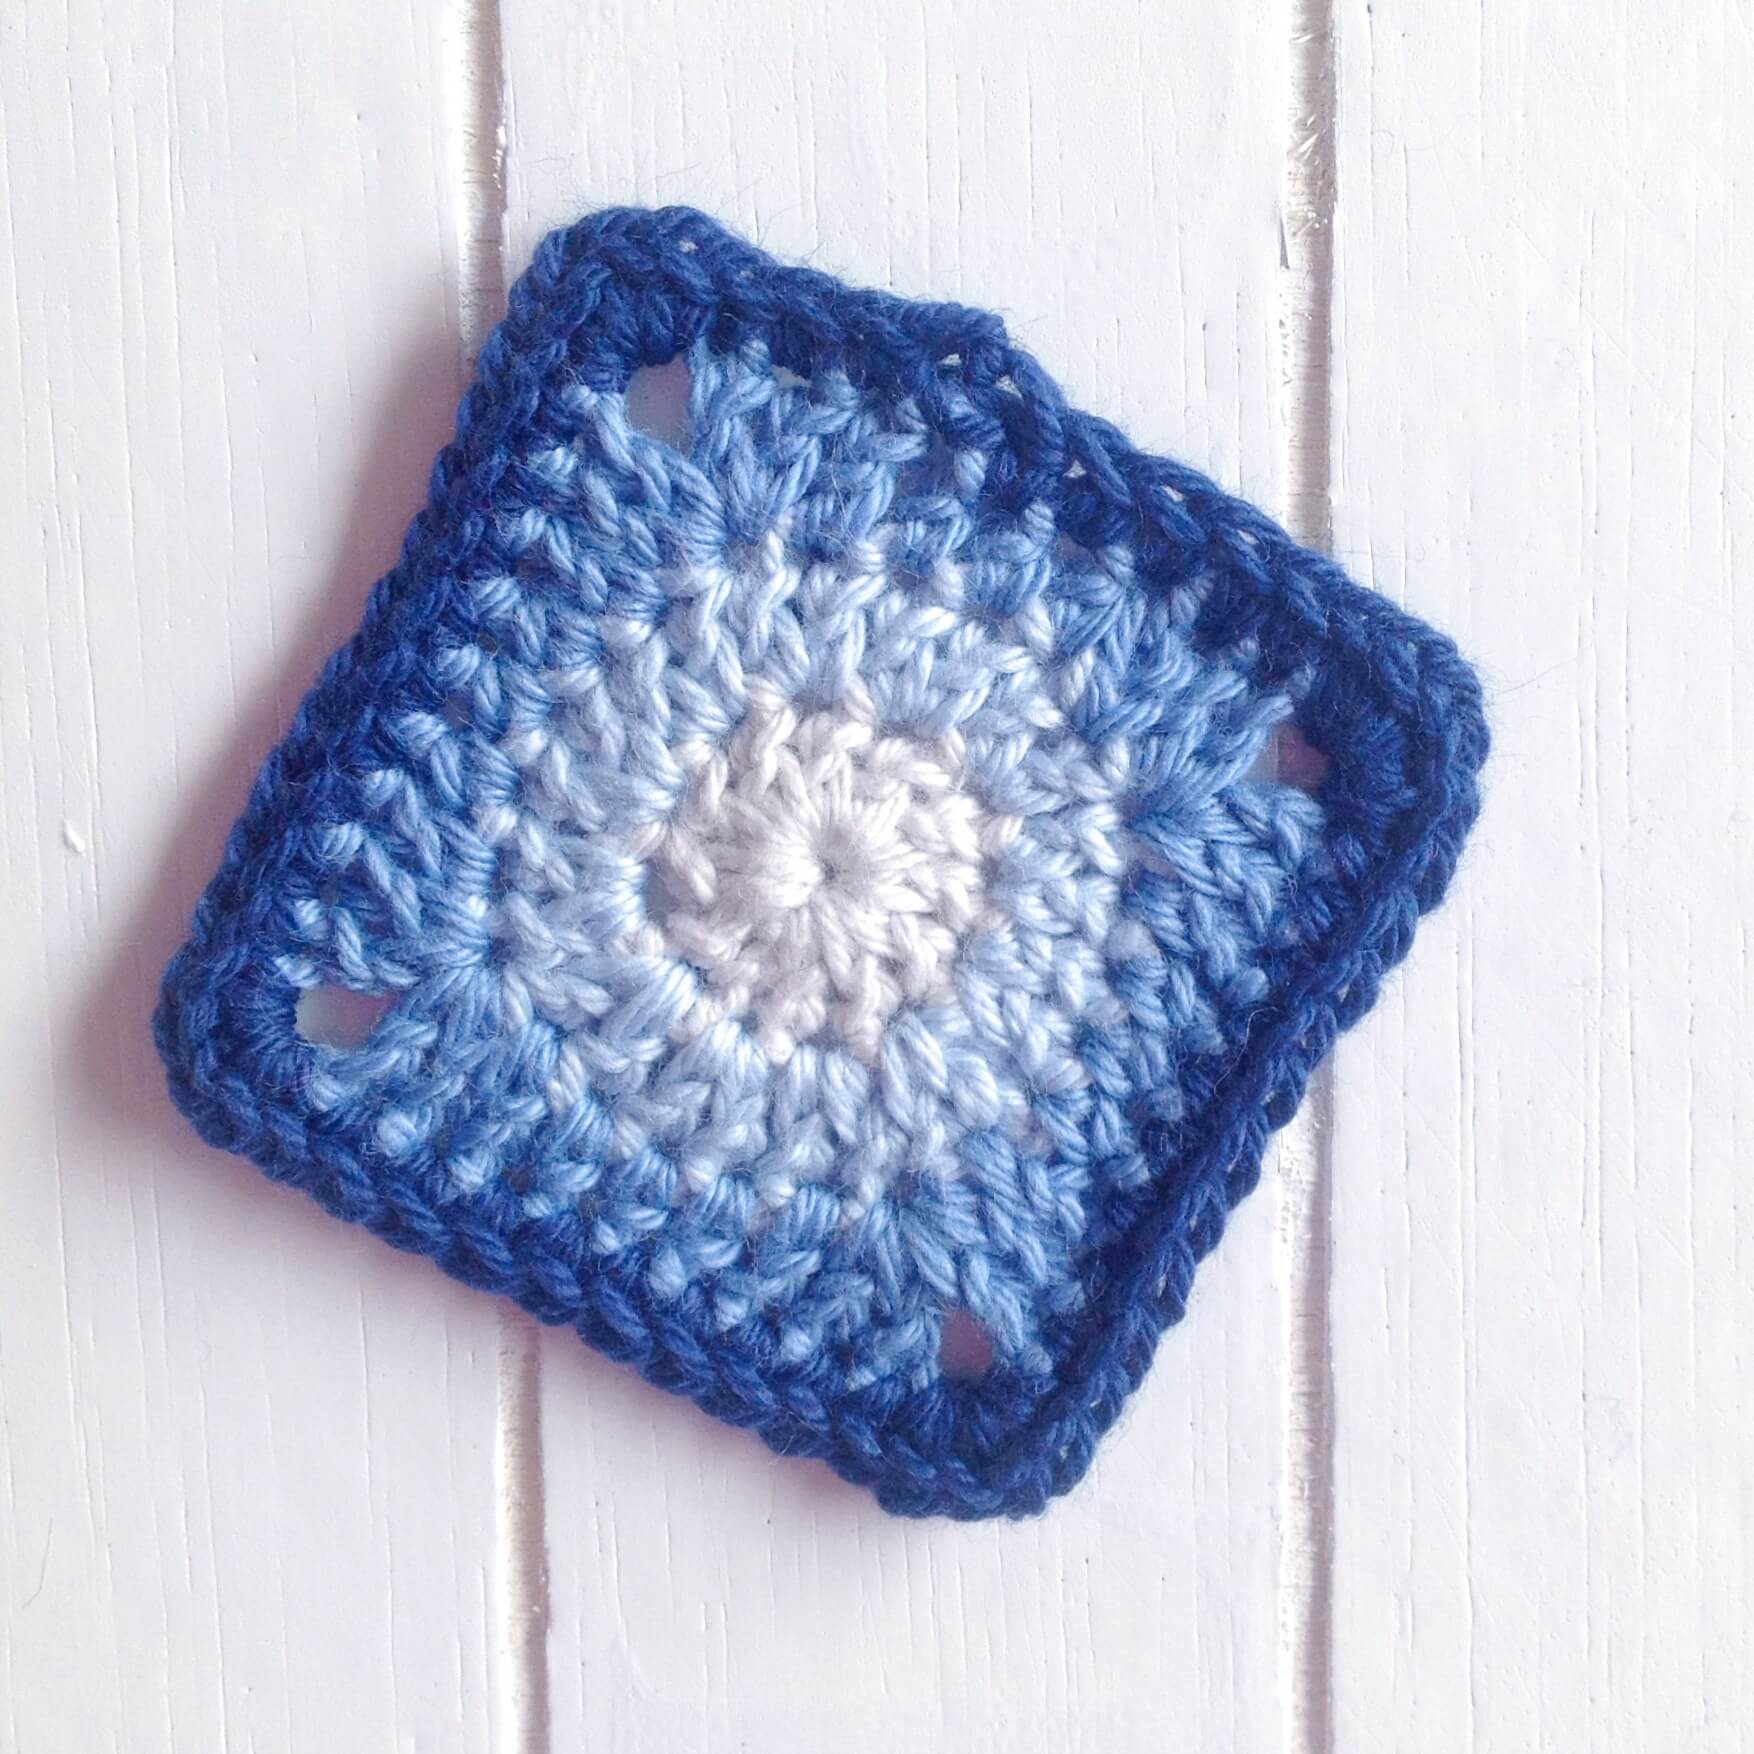 DIY Simple Granny Square Using Crochet Easy Granny Square Patterns